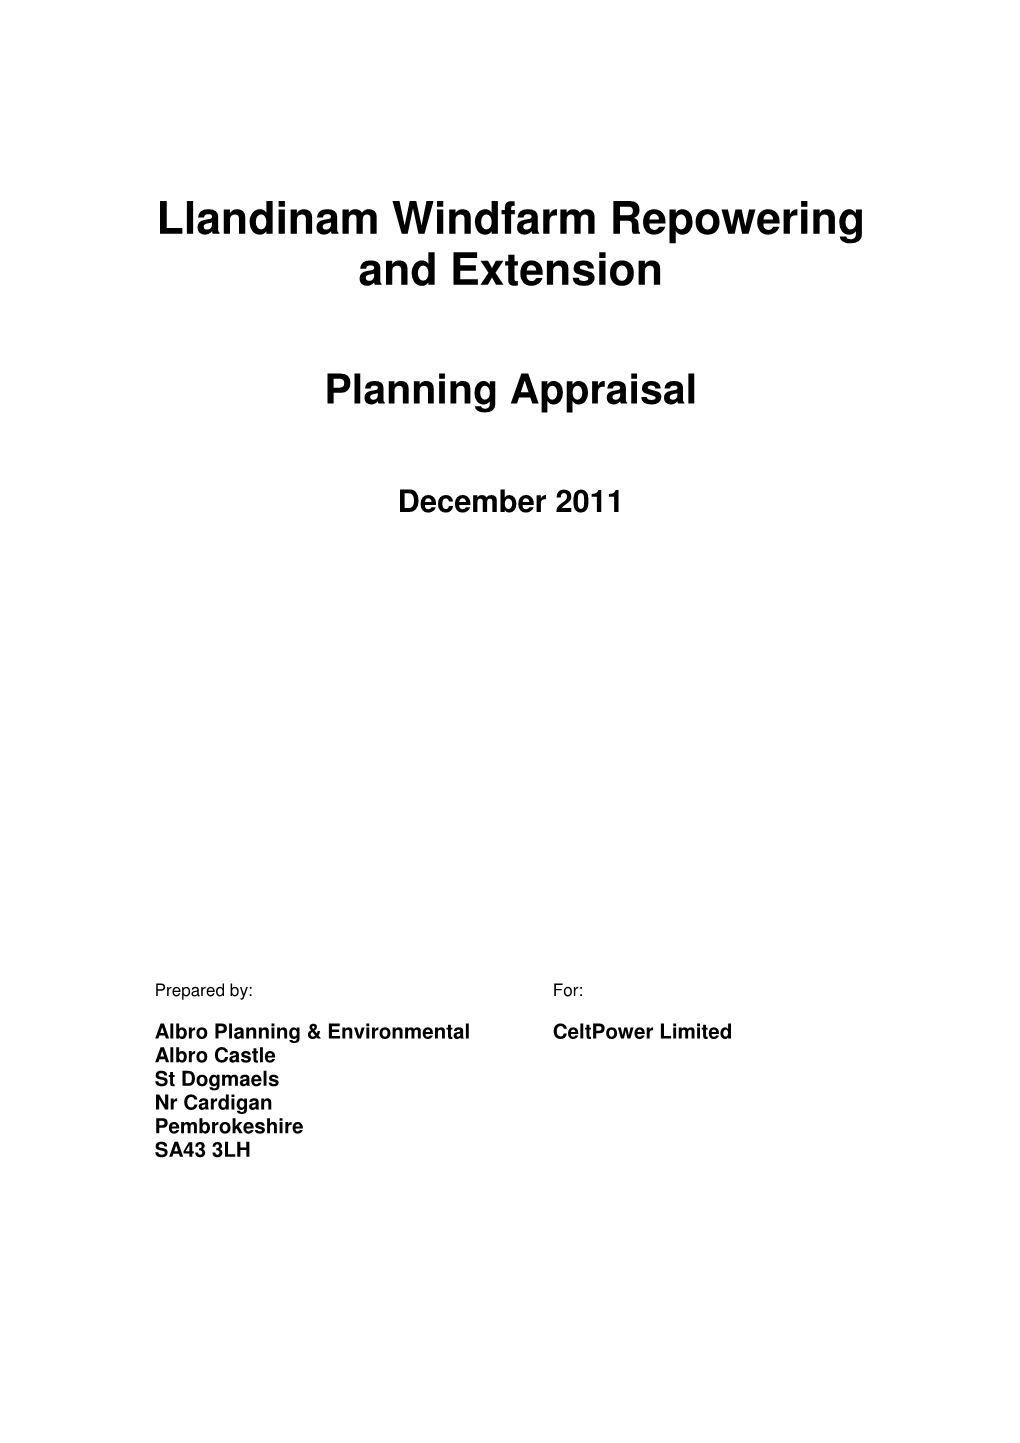 Llandinam Windfarm Repowering and Extension